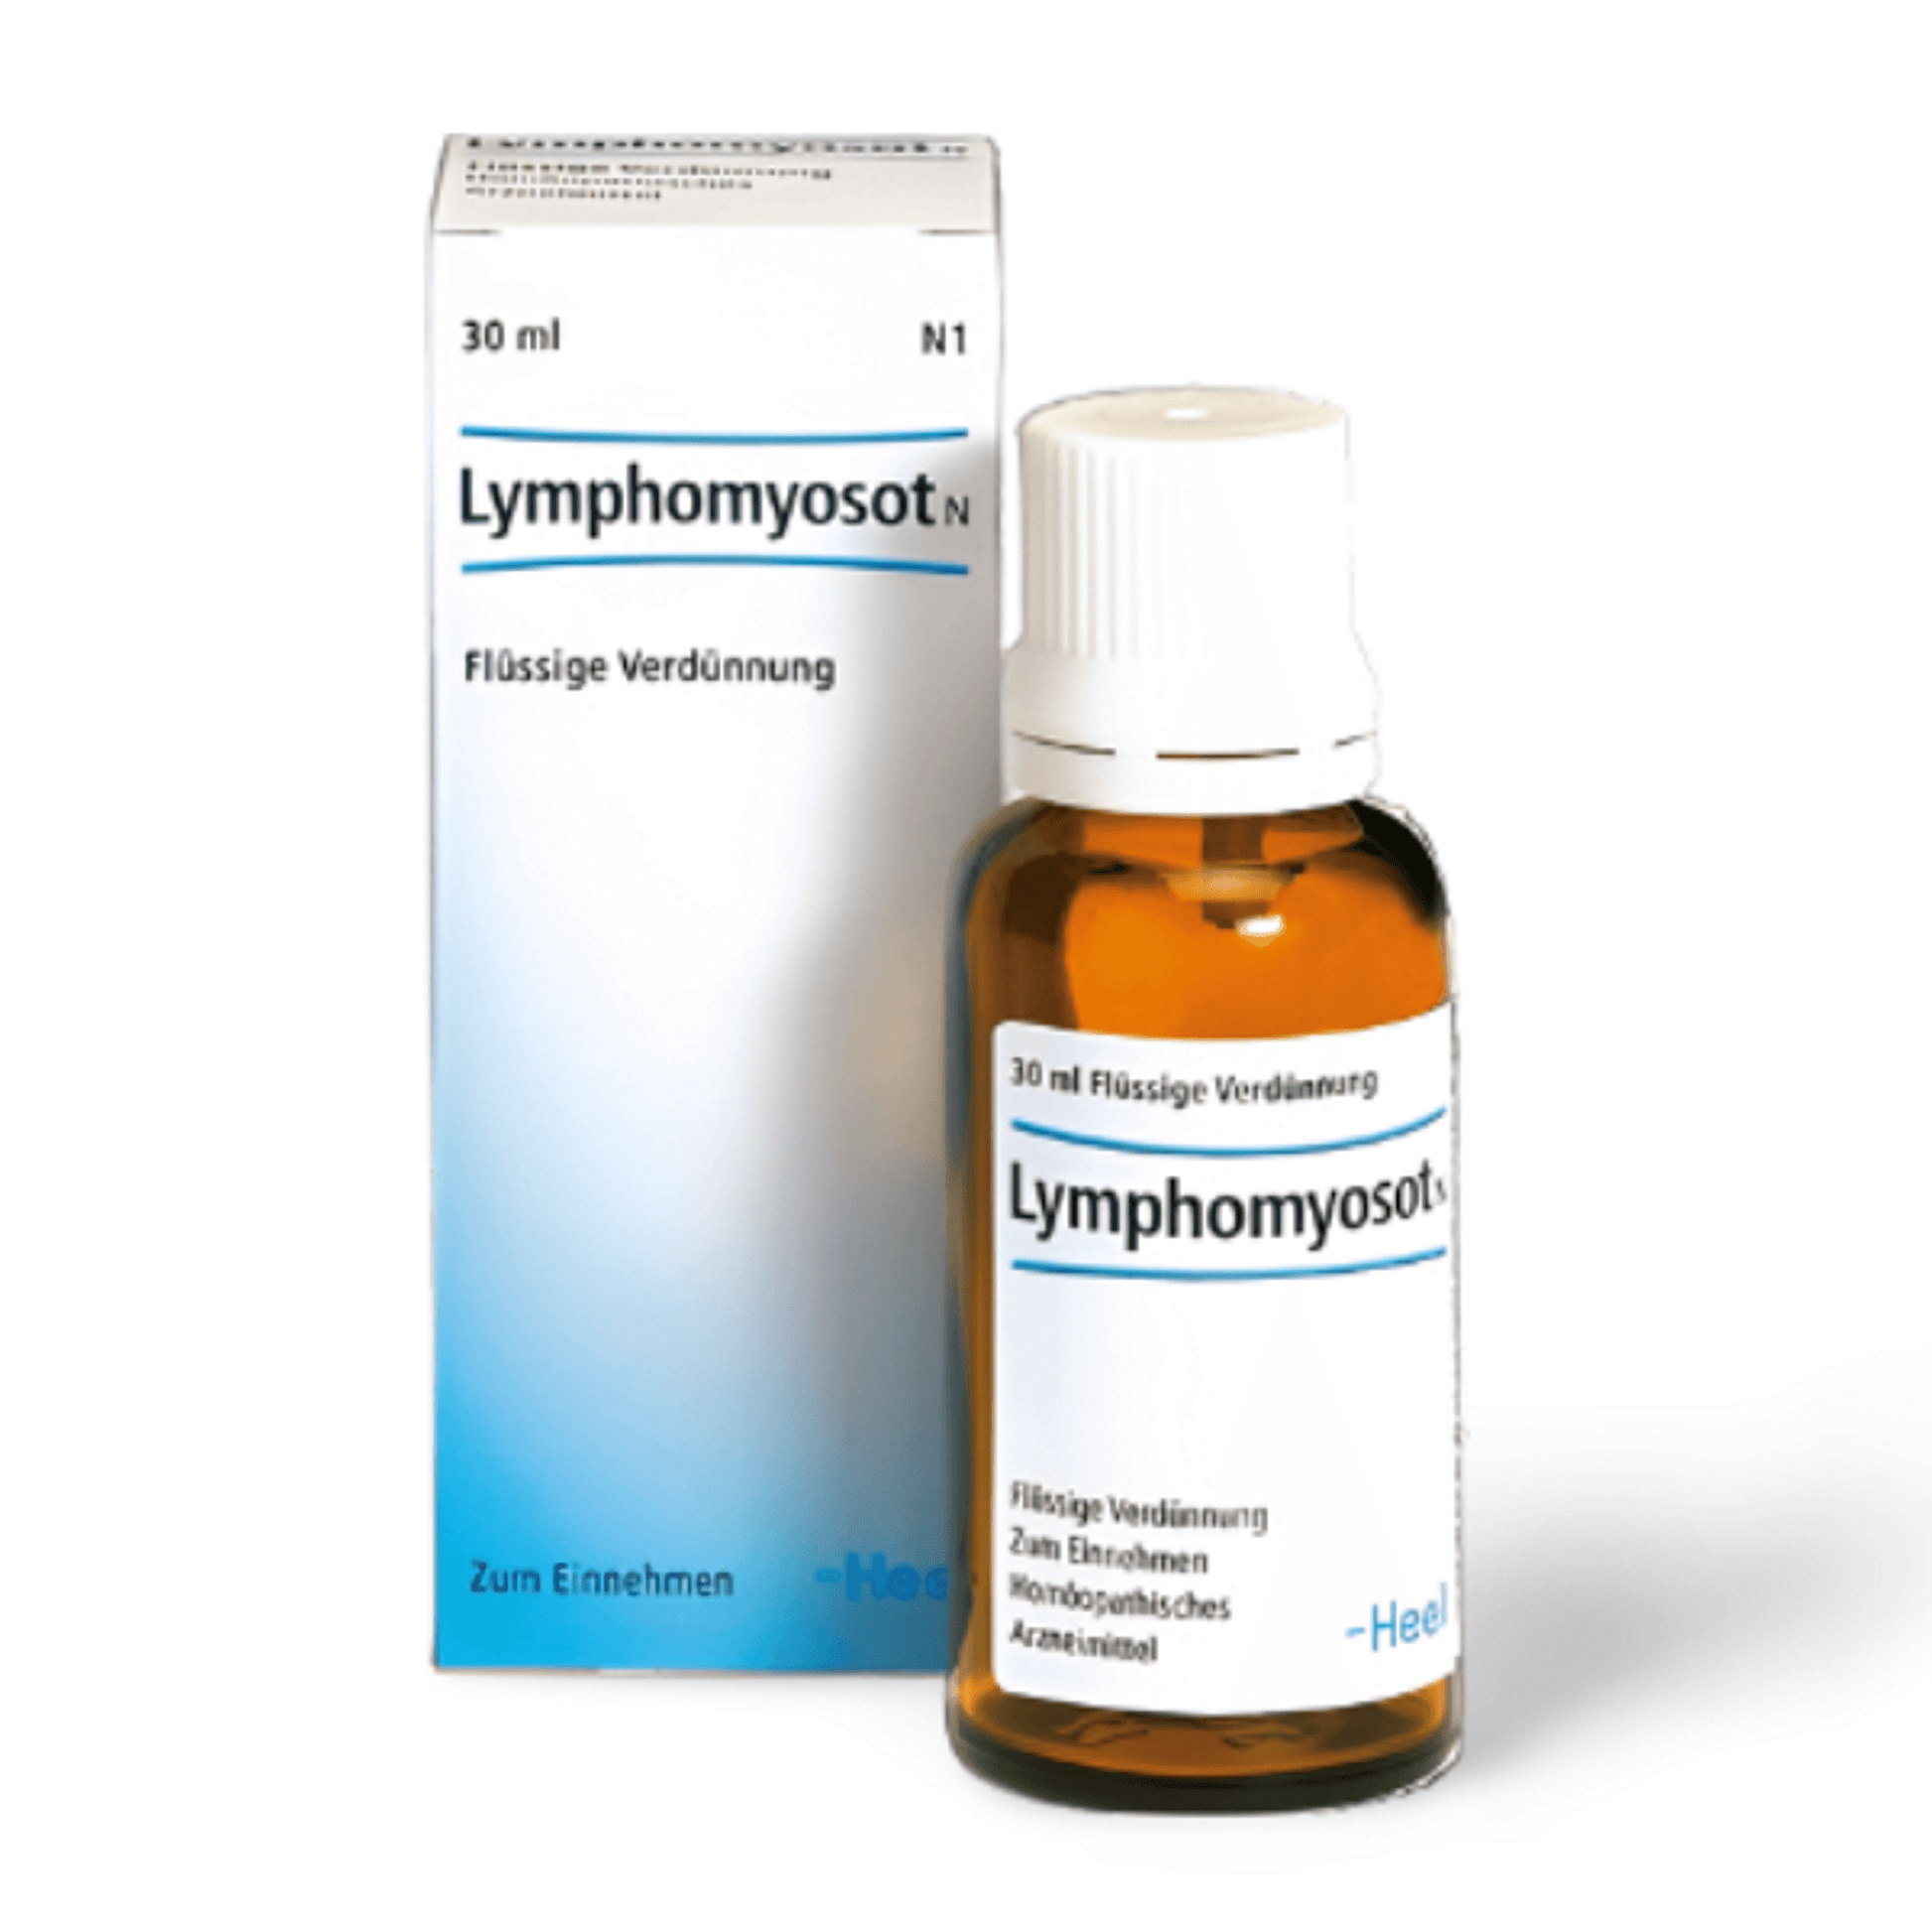 HEEL Lymphomyosot - THE GOOD STUFF